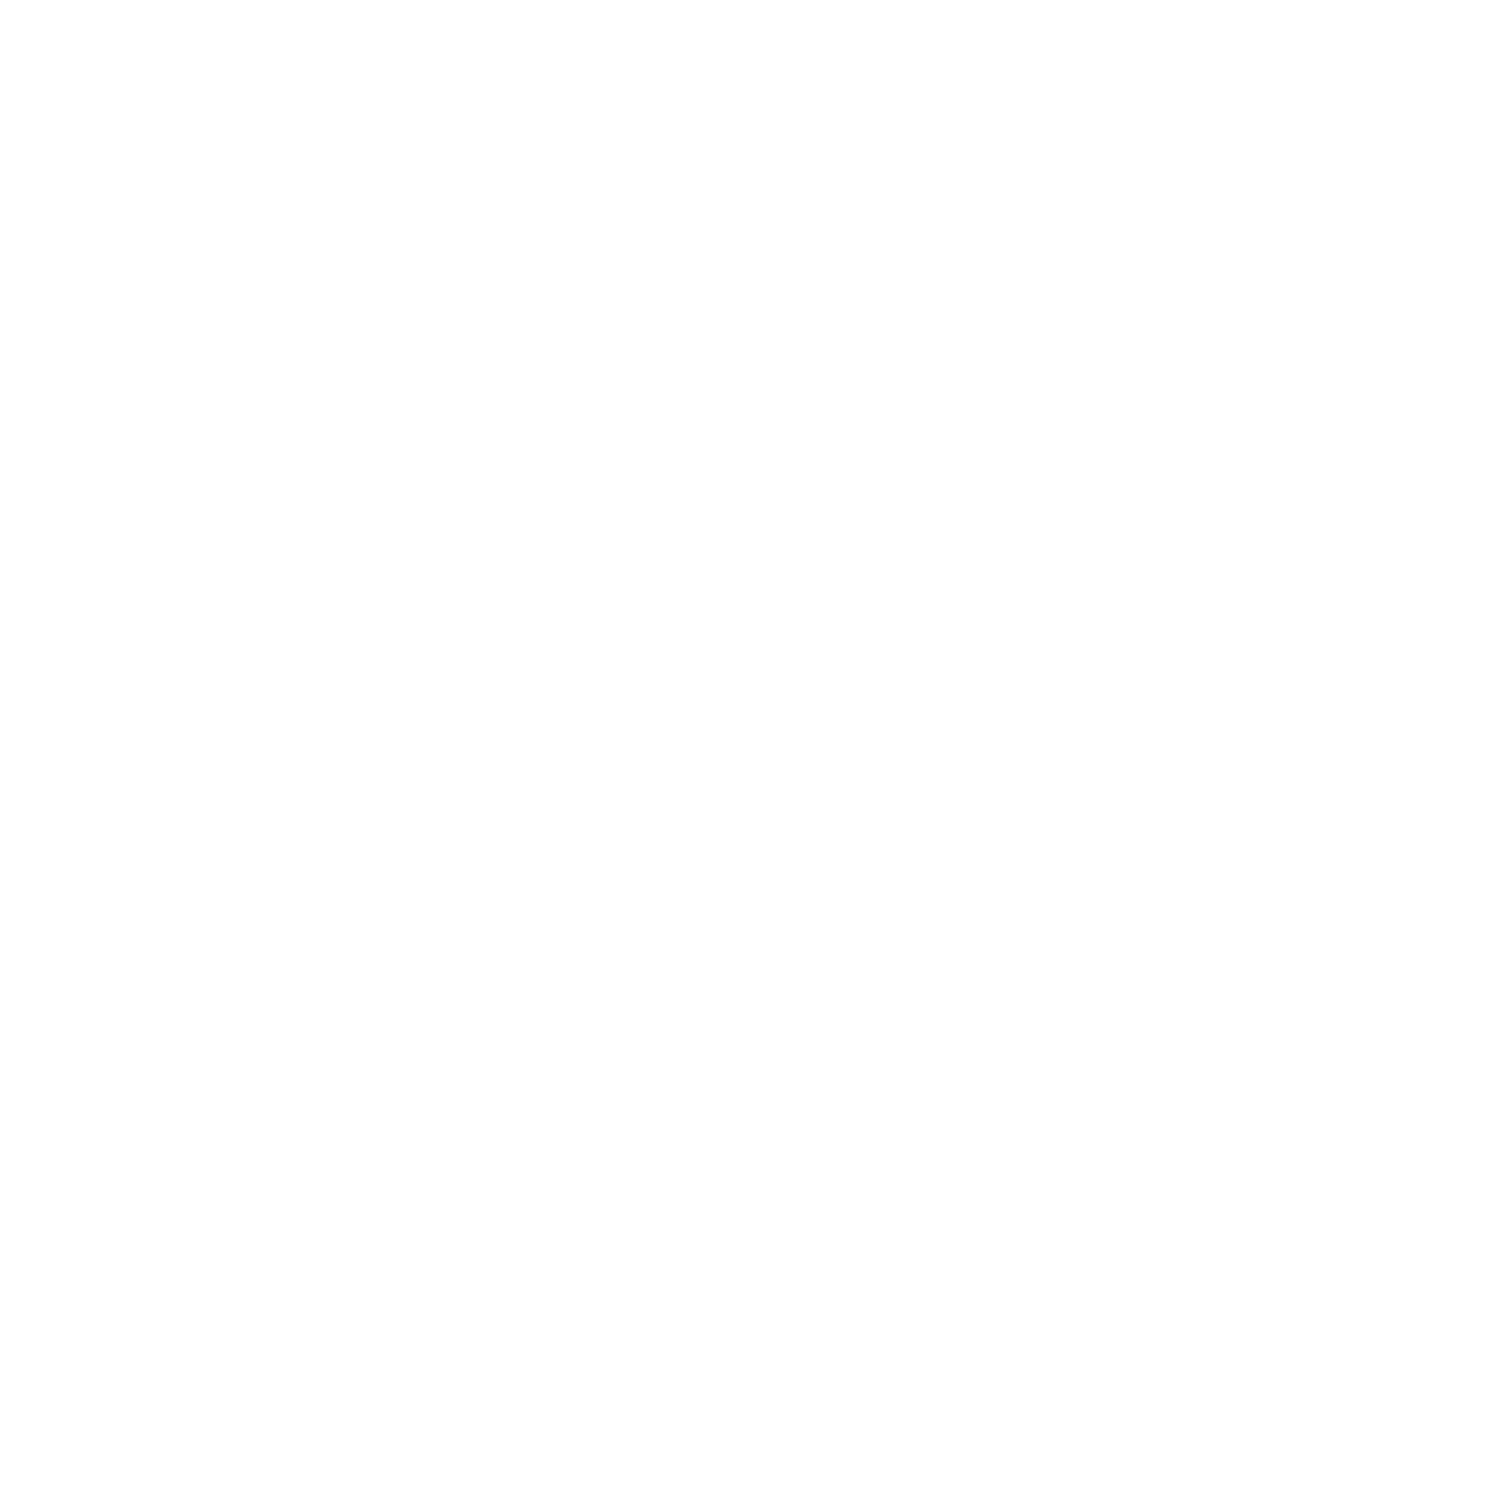 Andrew Avi